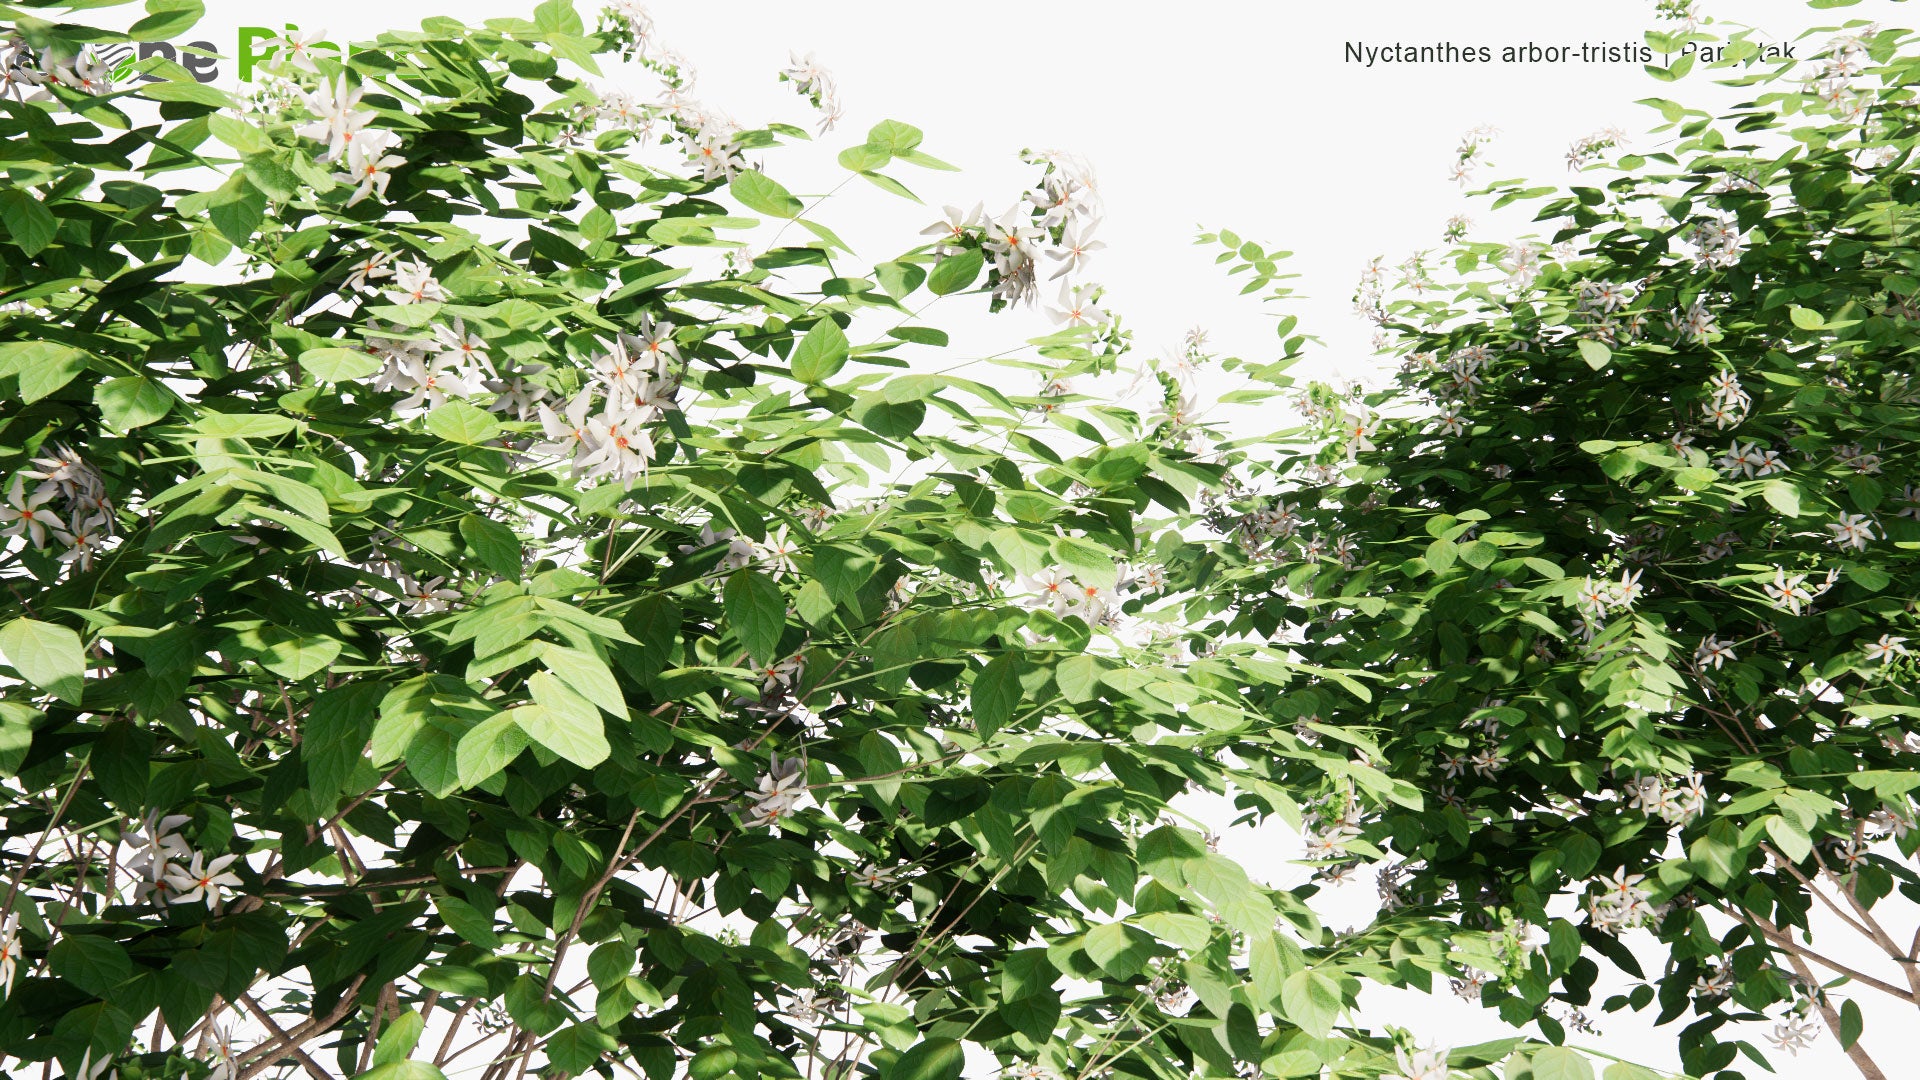 Low Poly Nyctanthes Arbor-Tristis - Parijatak, Night-Flowering Jasmine, Parija (3D Model)